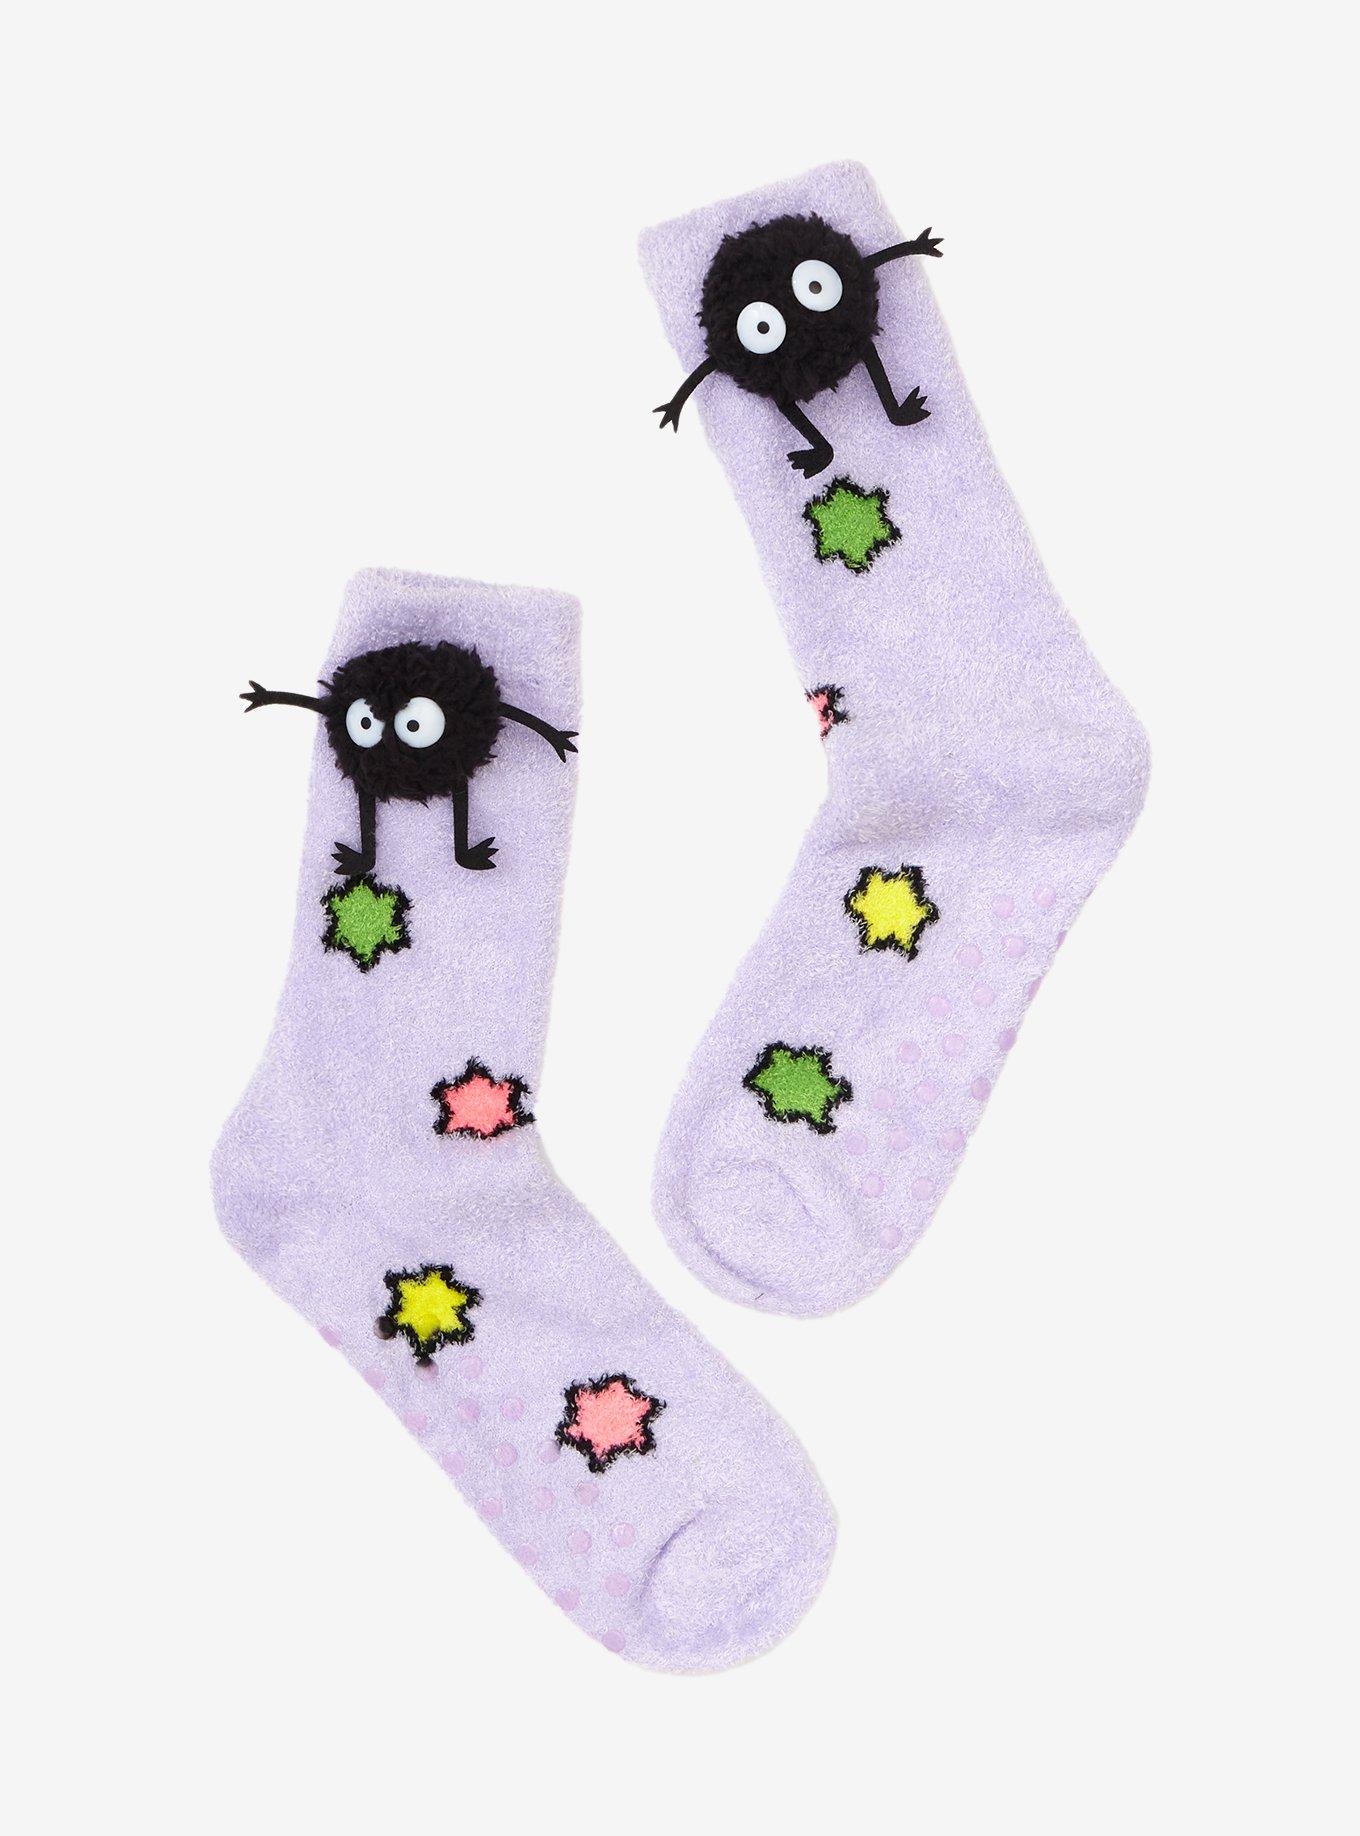 Studio Ghibli Spirited Away Soot Sprites Plush Cozy Socks